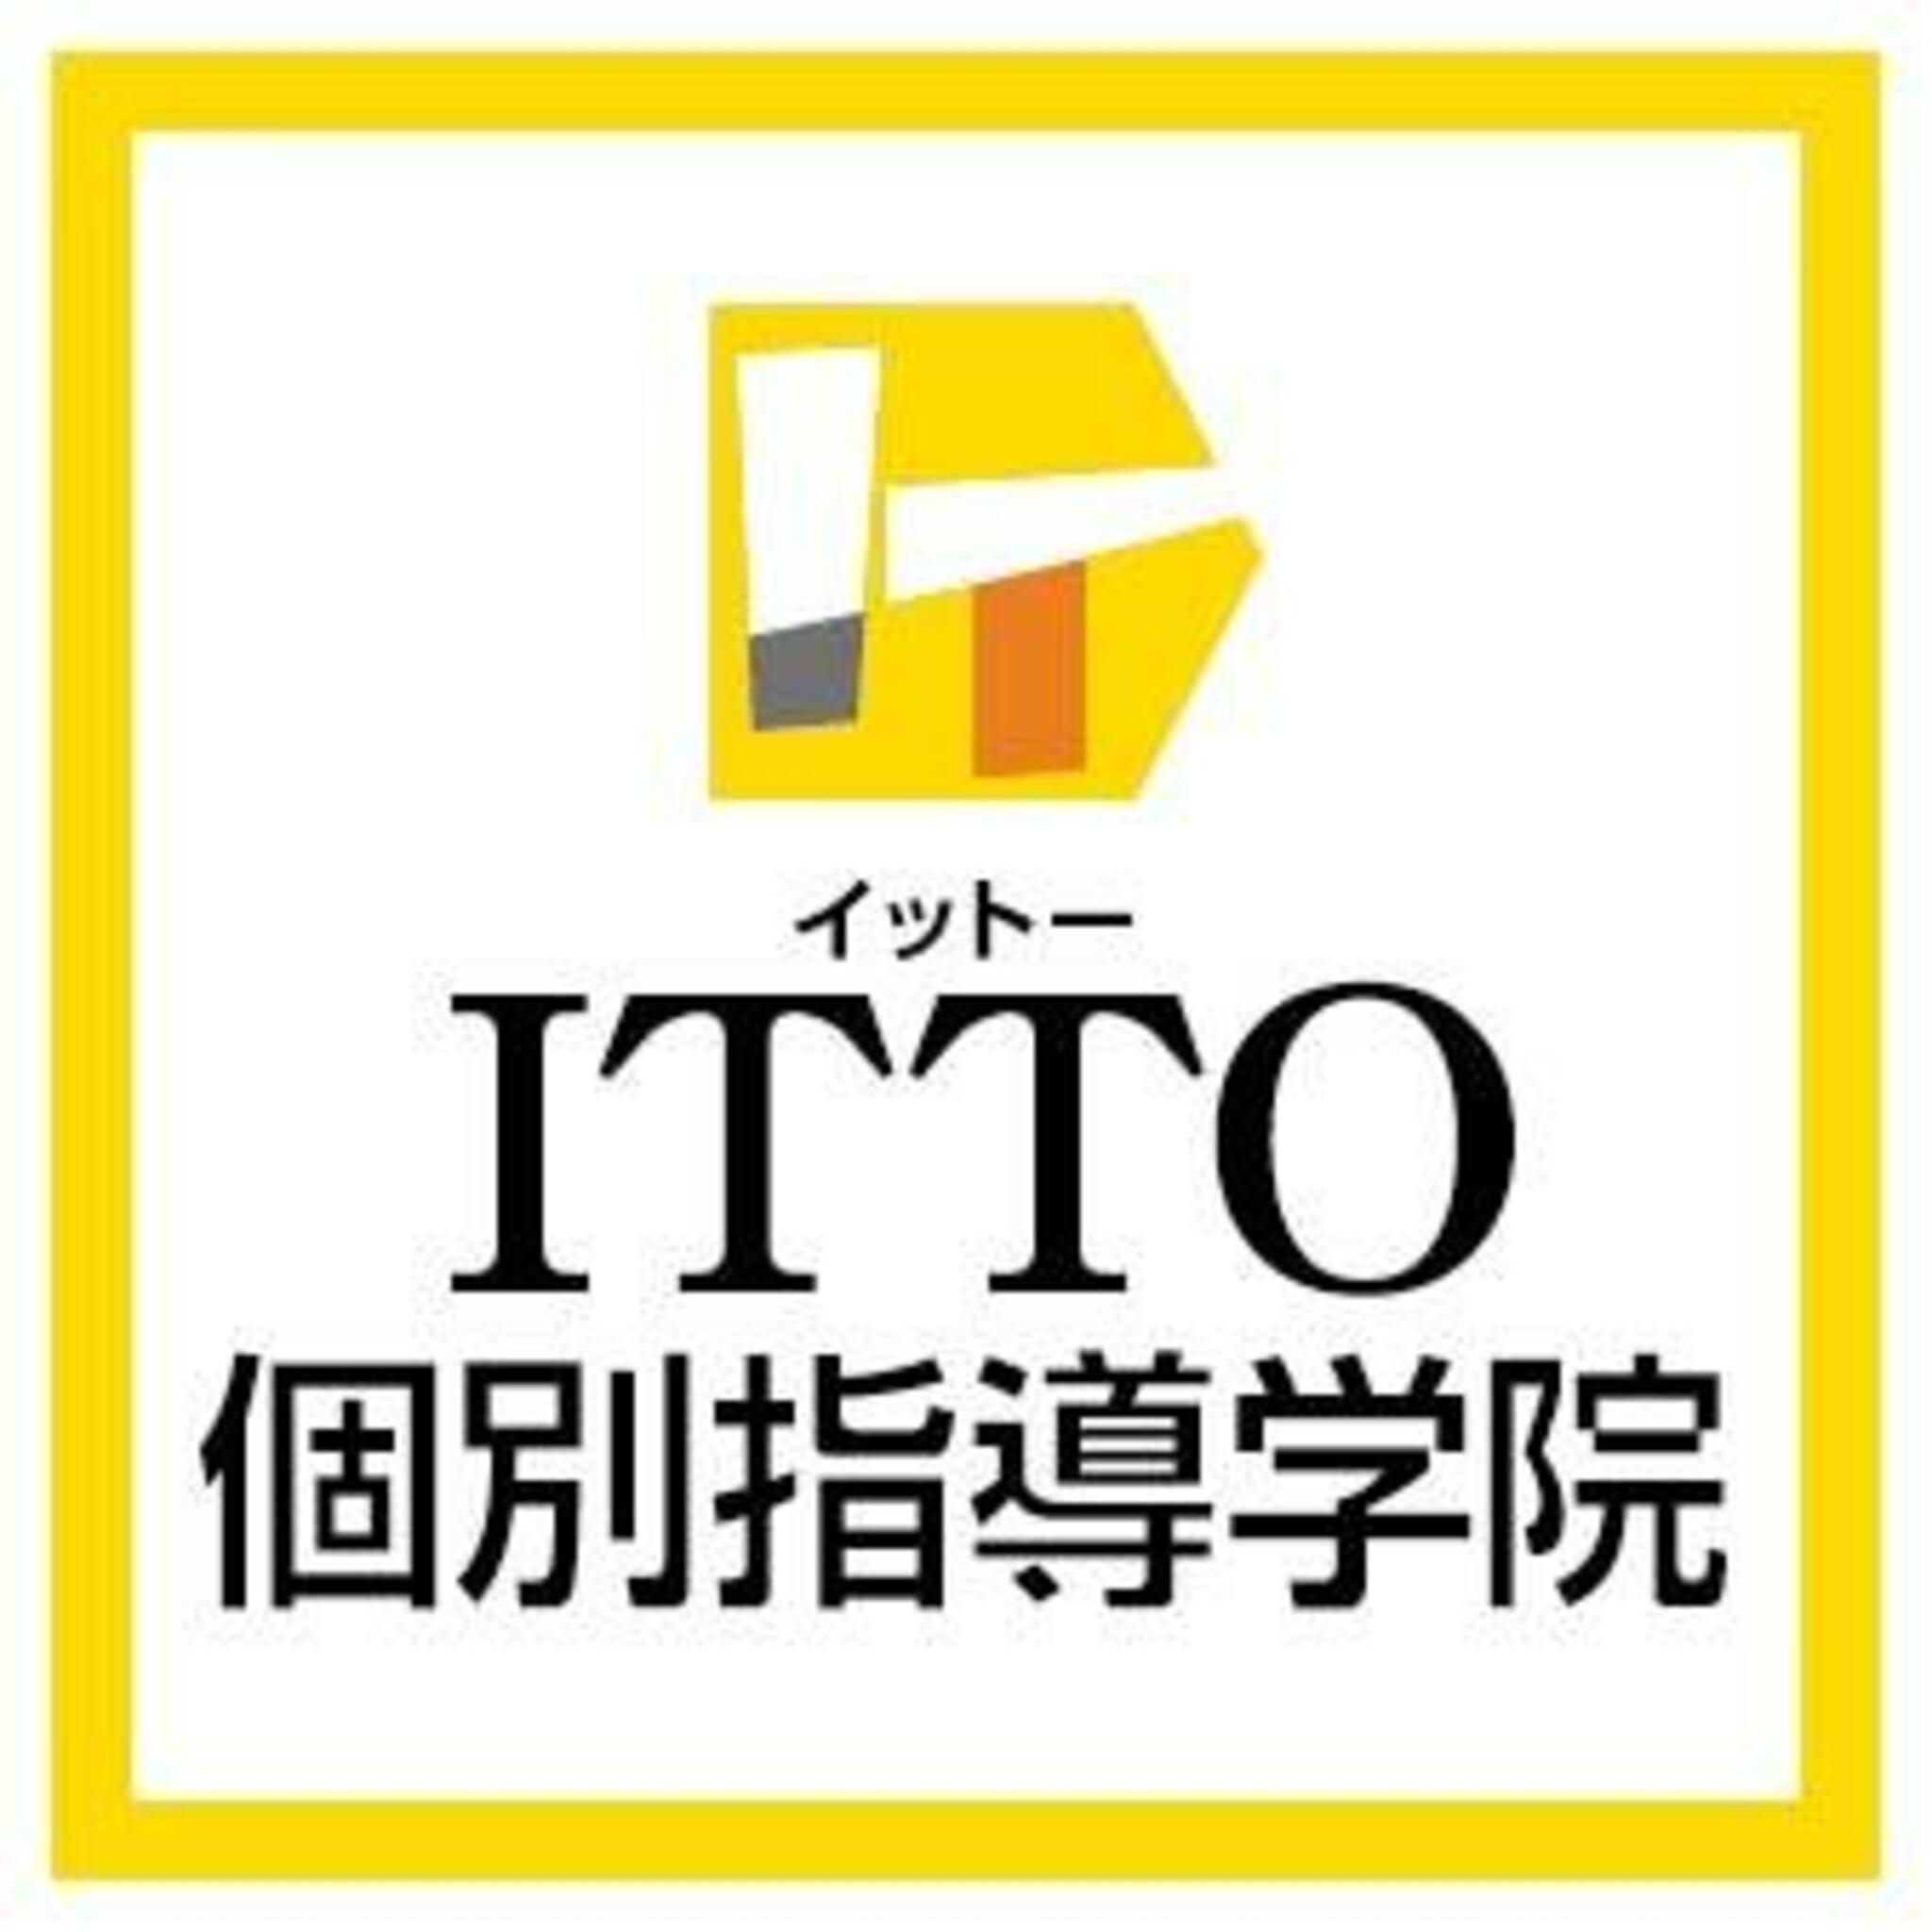 ITTO個別指導学院 大桐校の代表写真7